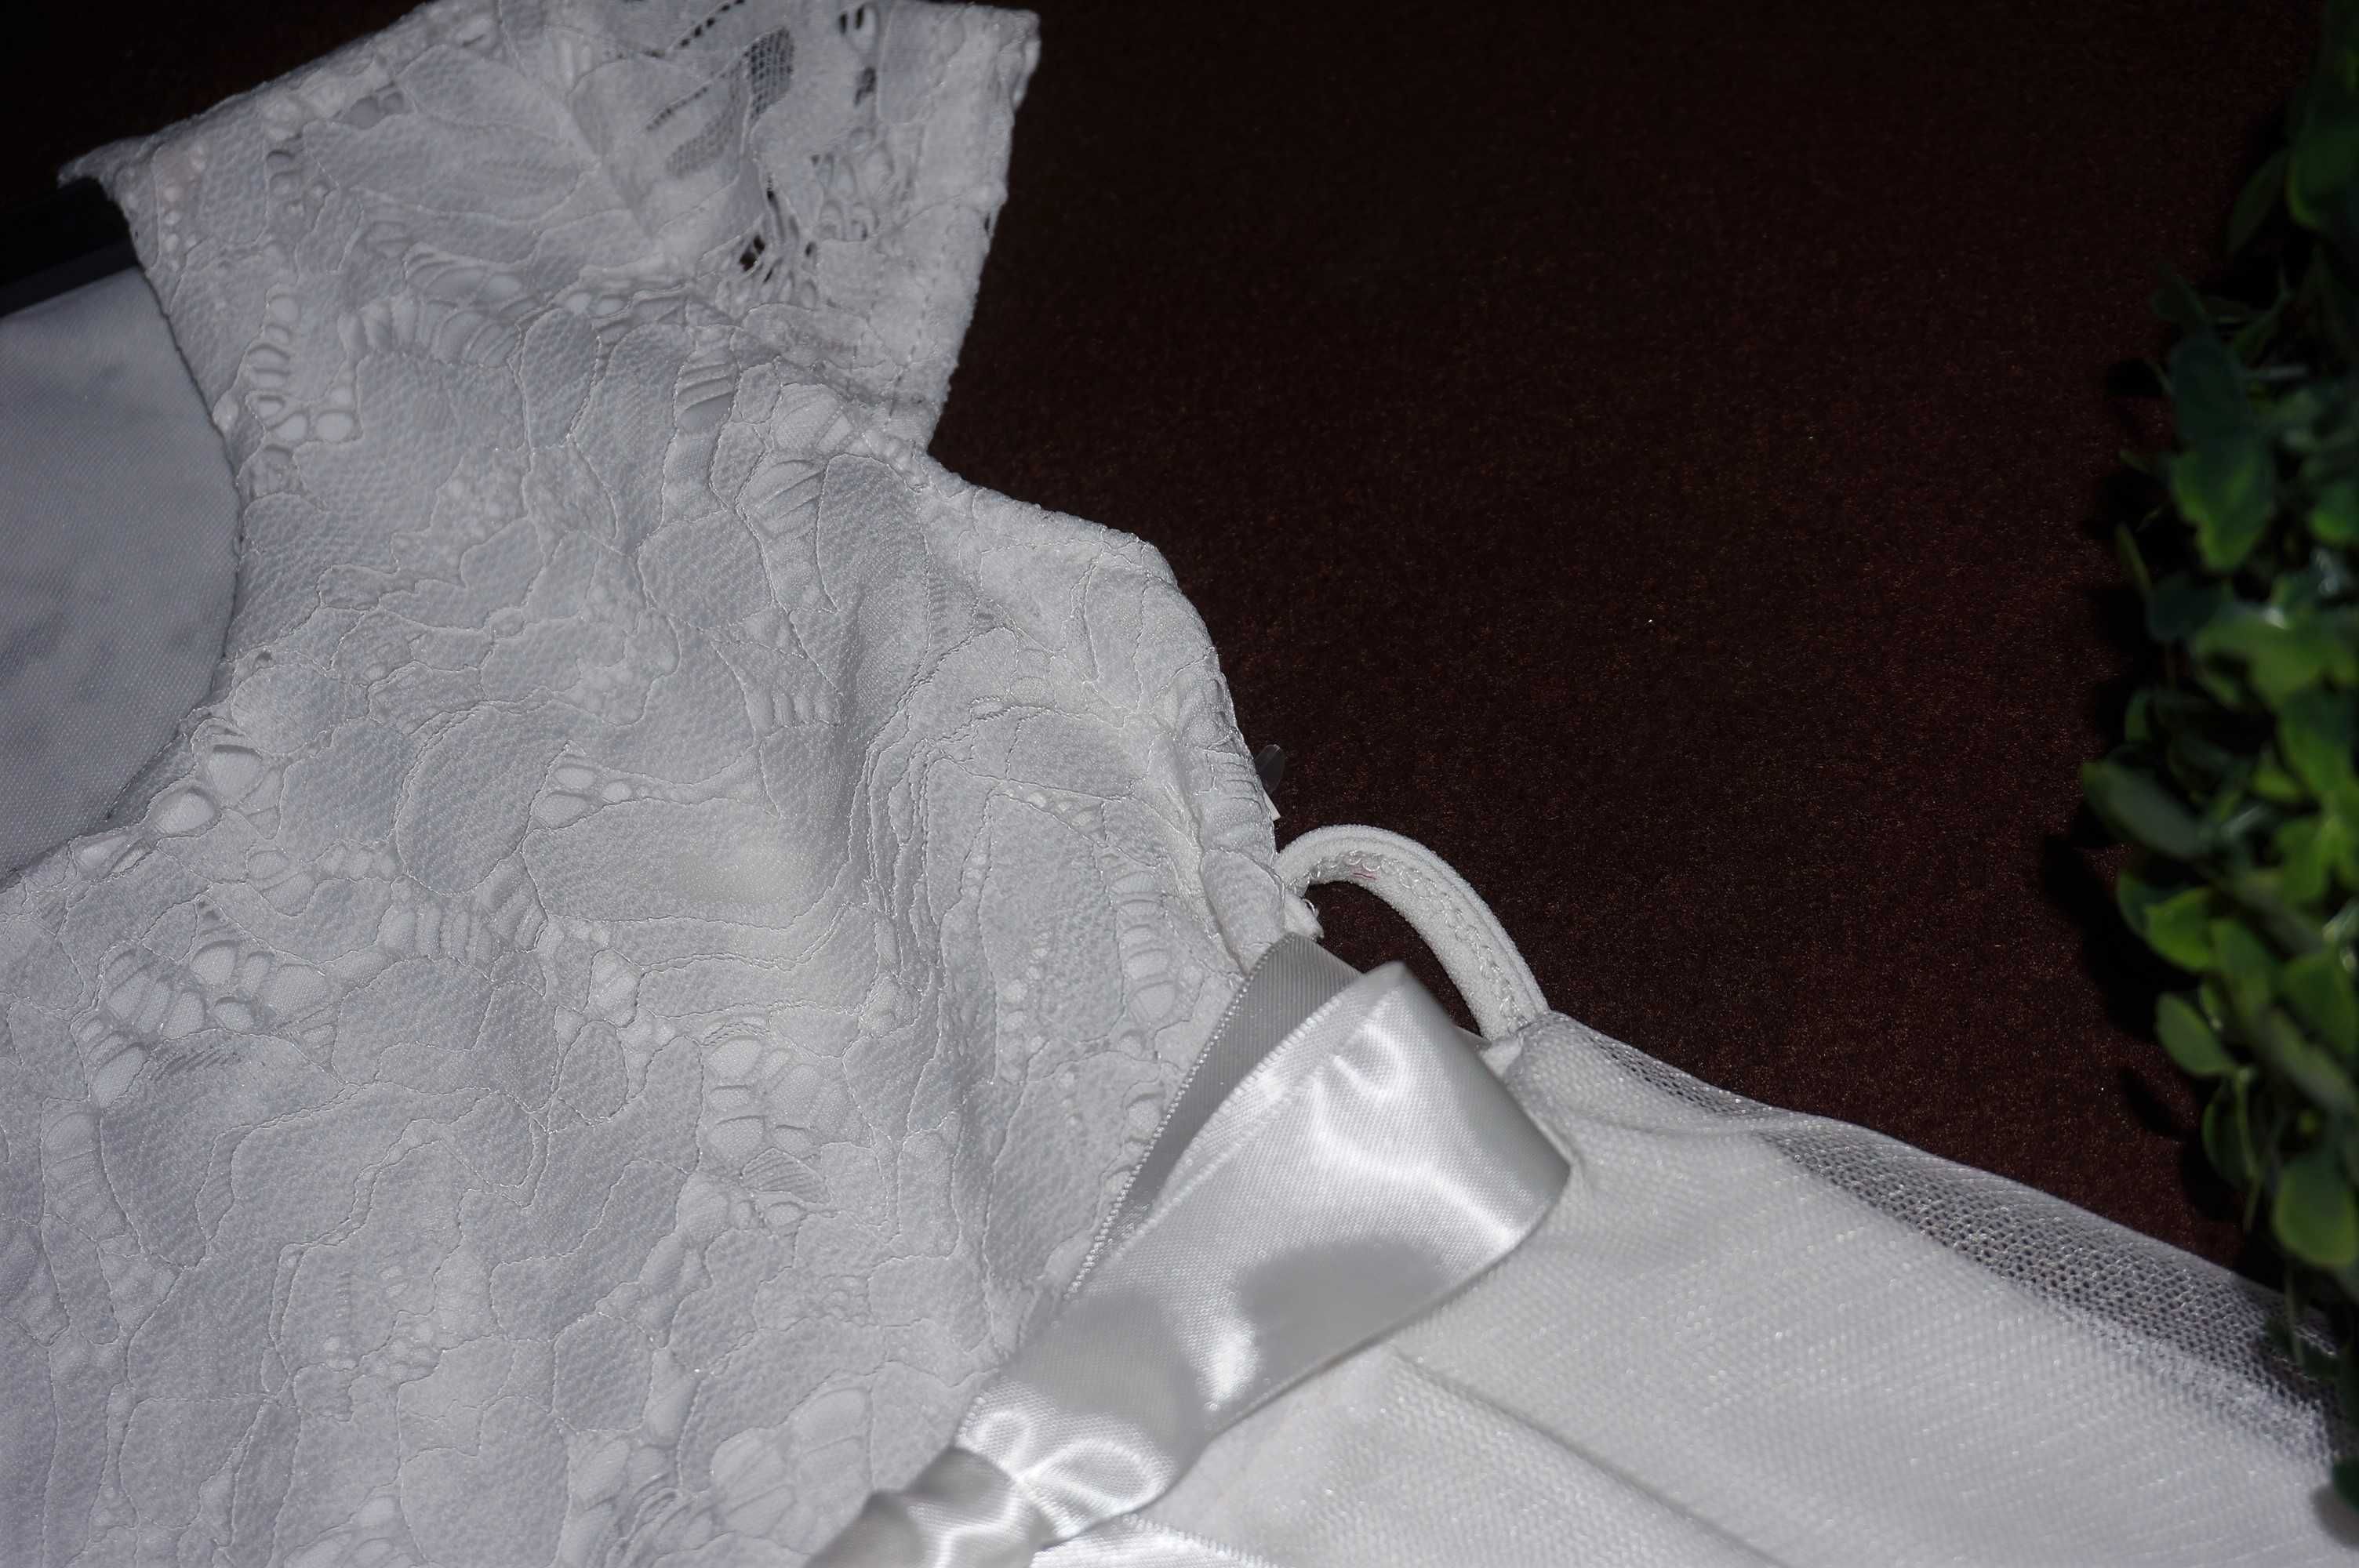 Biała sukienka 98/104 delikatna koronka wesele komunia